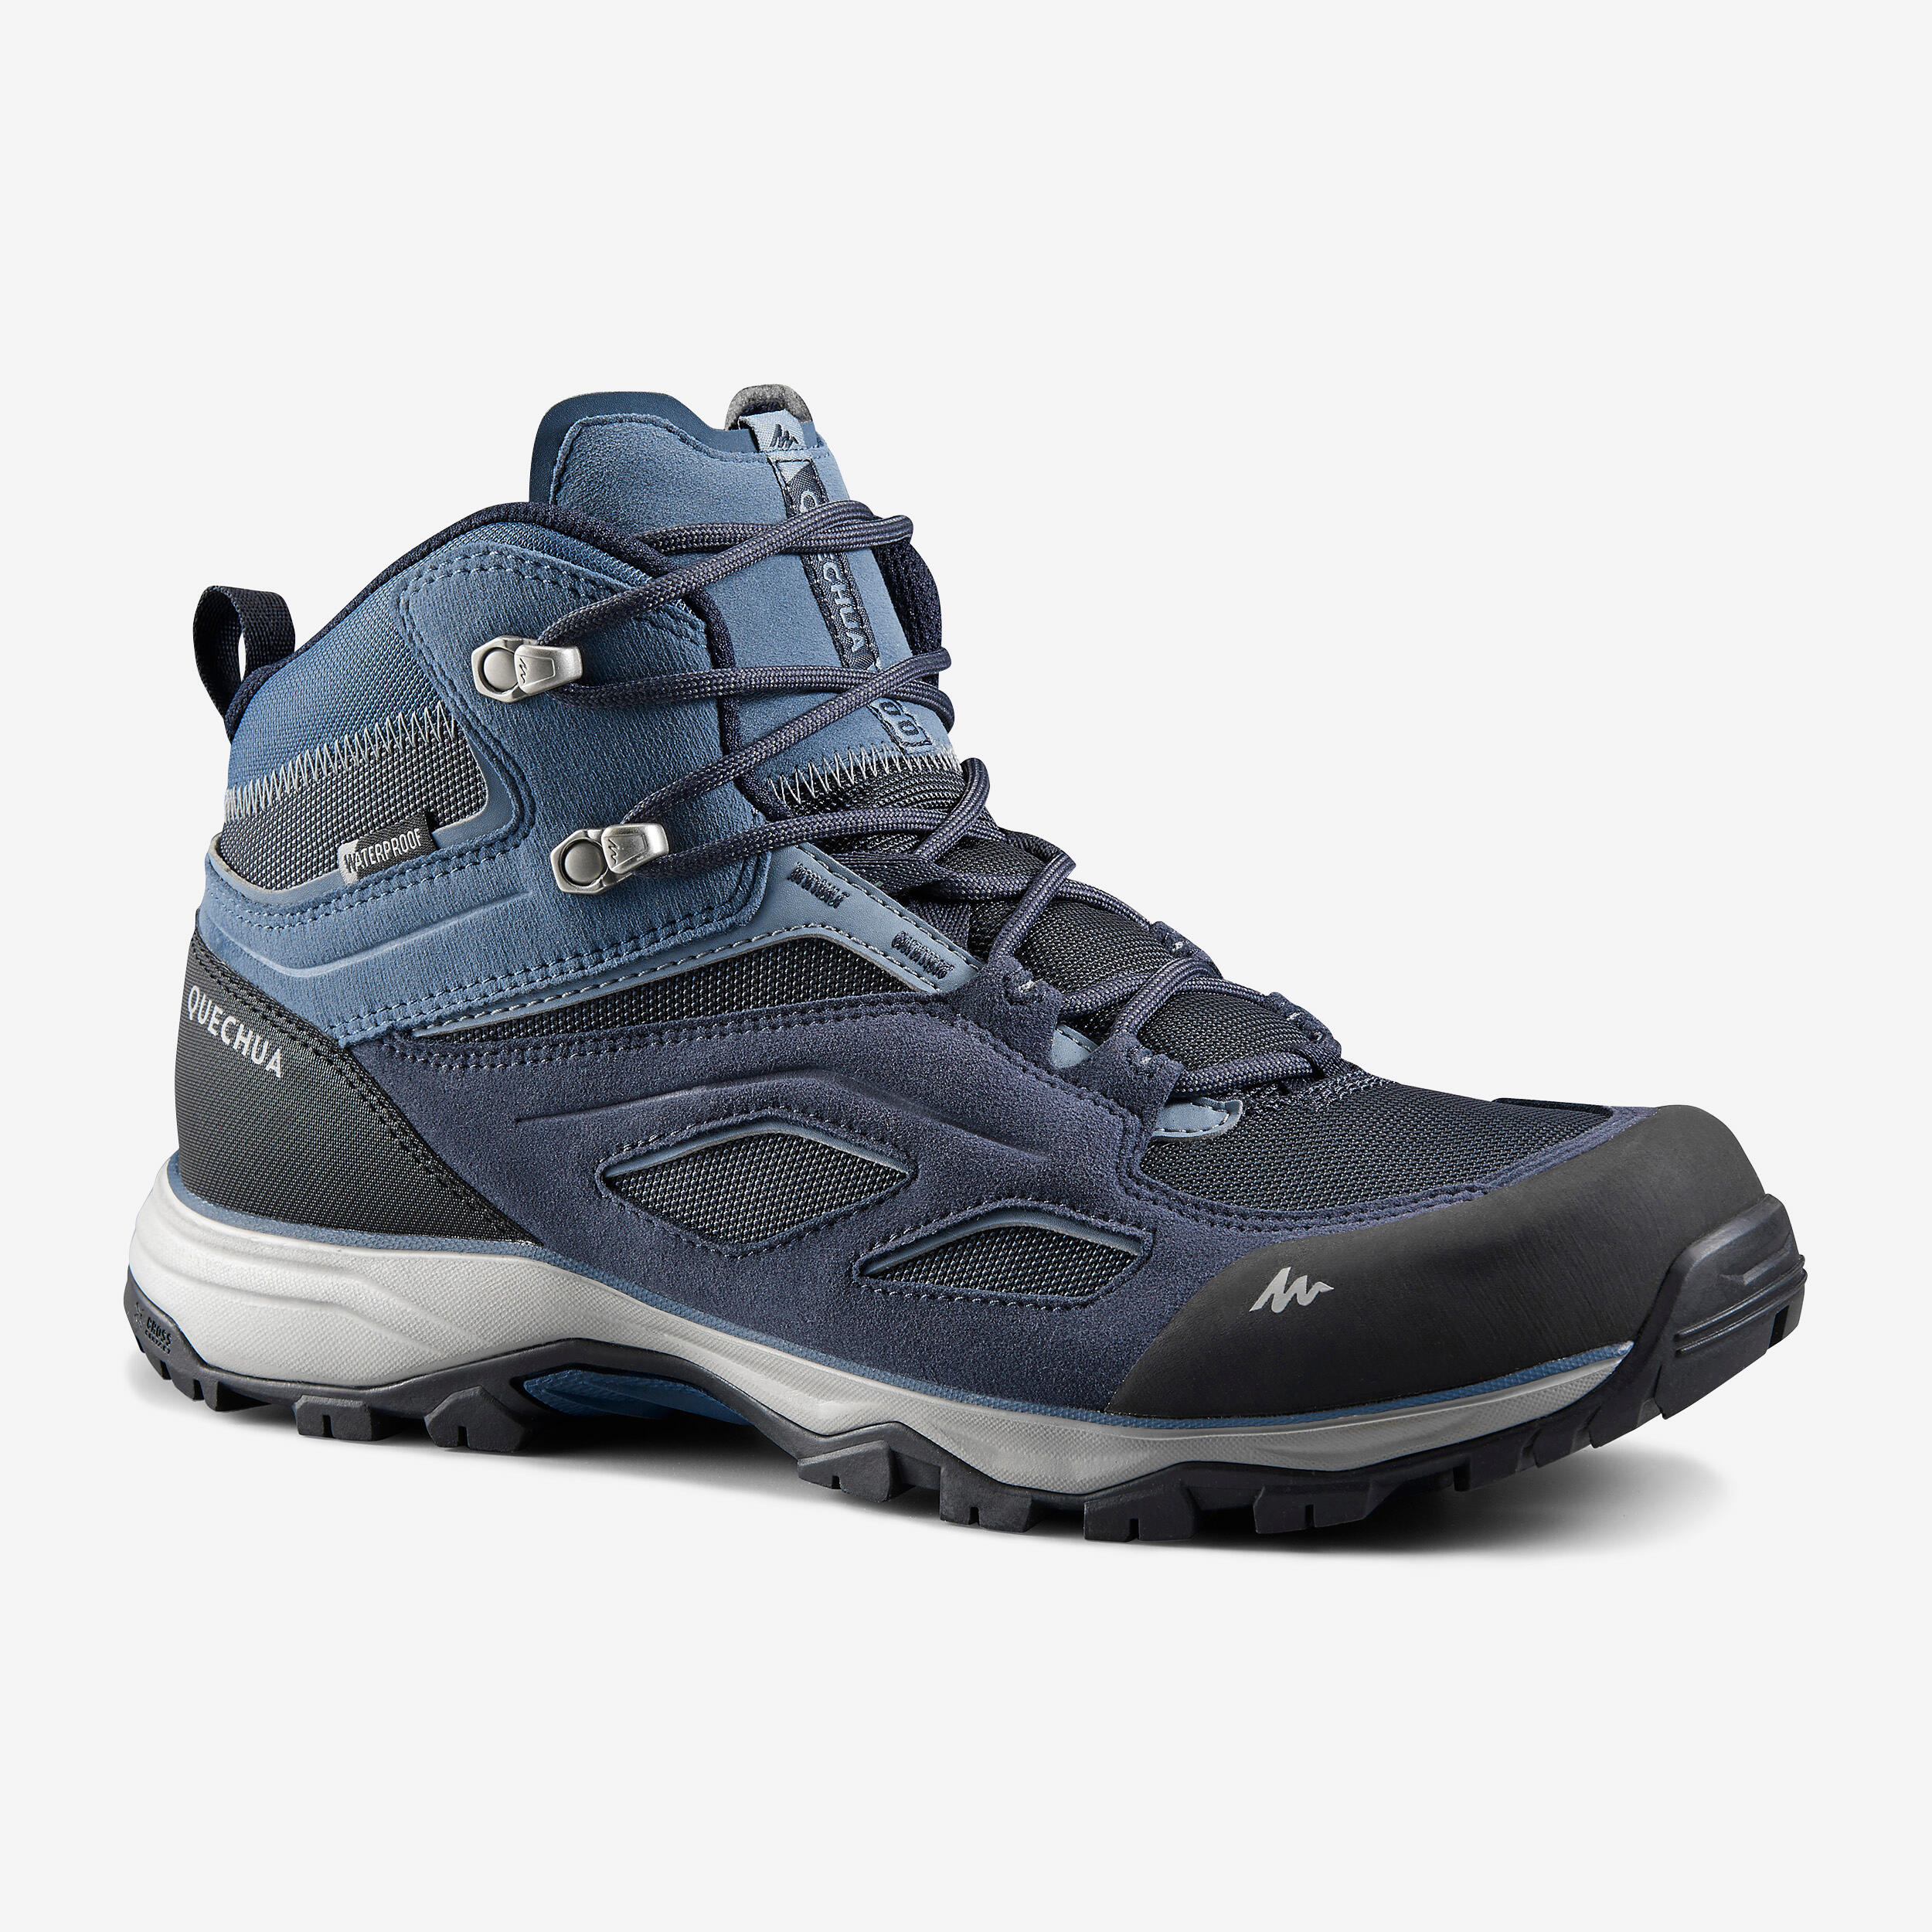 QUECHUA Men's Waterproof Mountain Walking Boot-Shoes - MH100 Mid - Blue